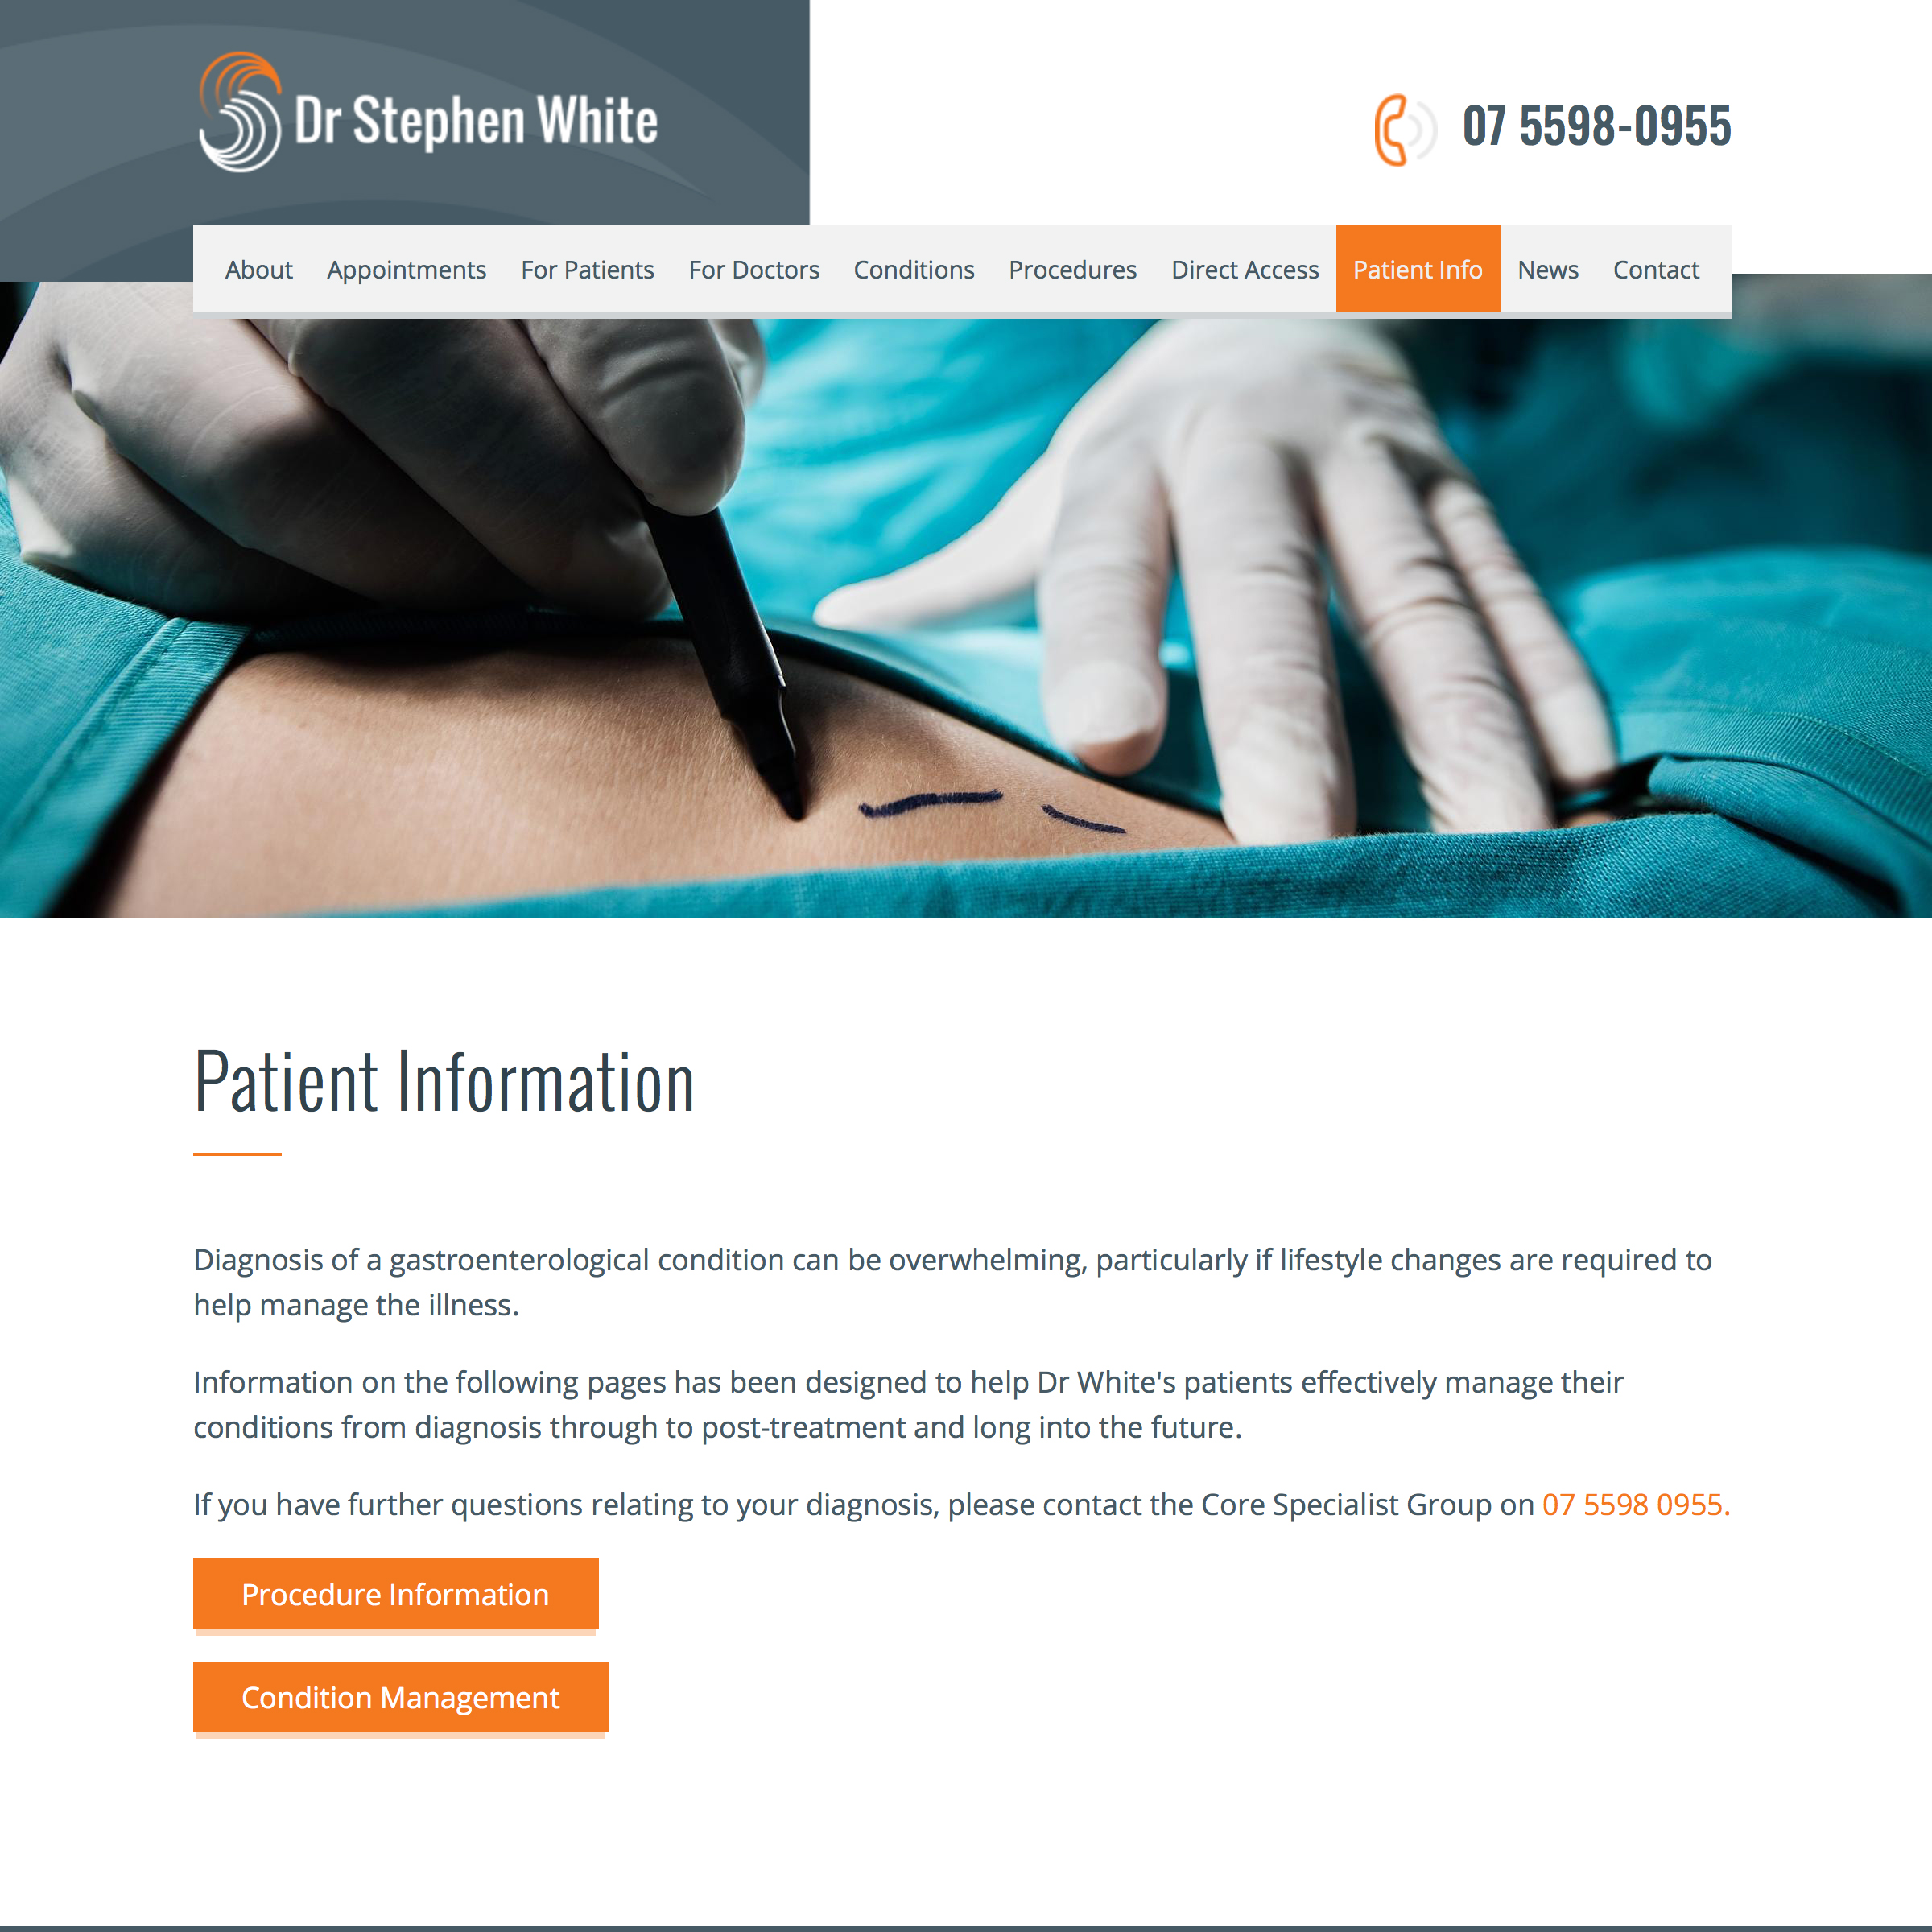 Dr Stephen White - Patient Information